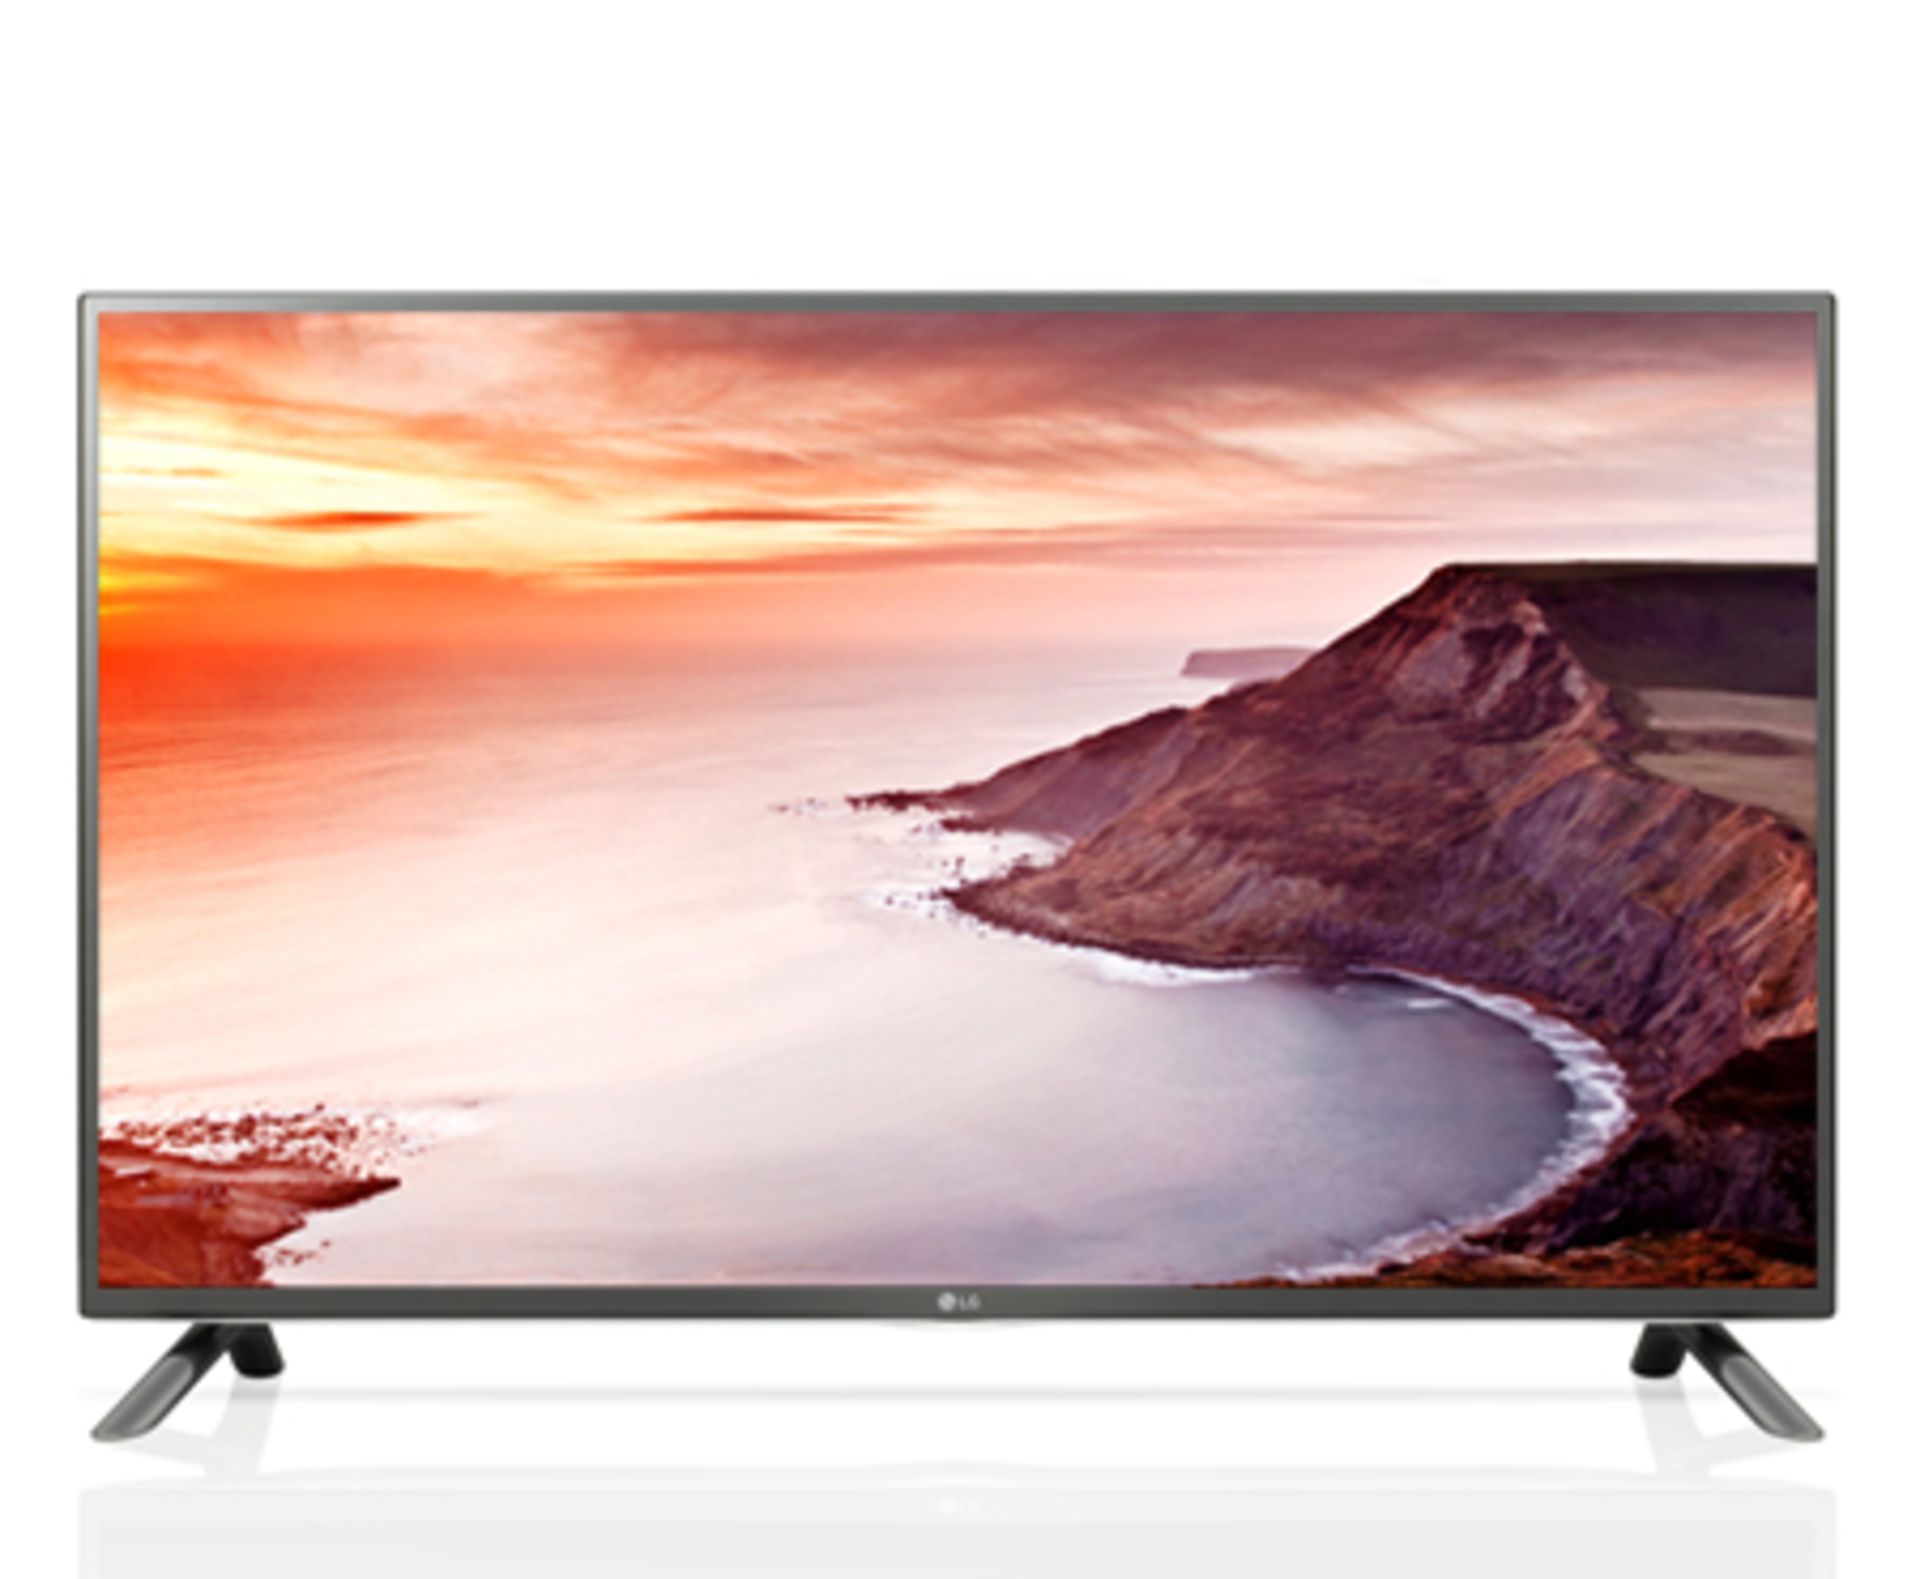 V Grade A 32LF650V LG 32" IPS Full HD - 2D to 3D Conversion - Smart TV WebOS 2.0 - Built In Wifi -